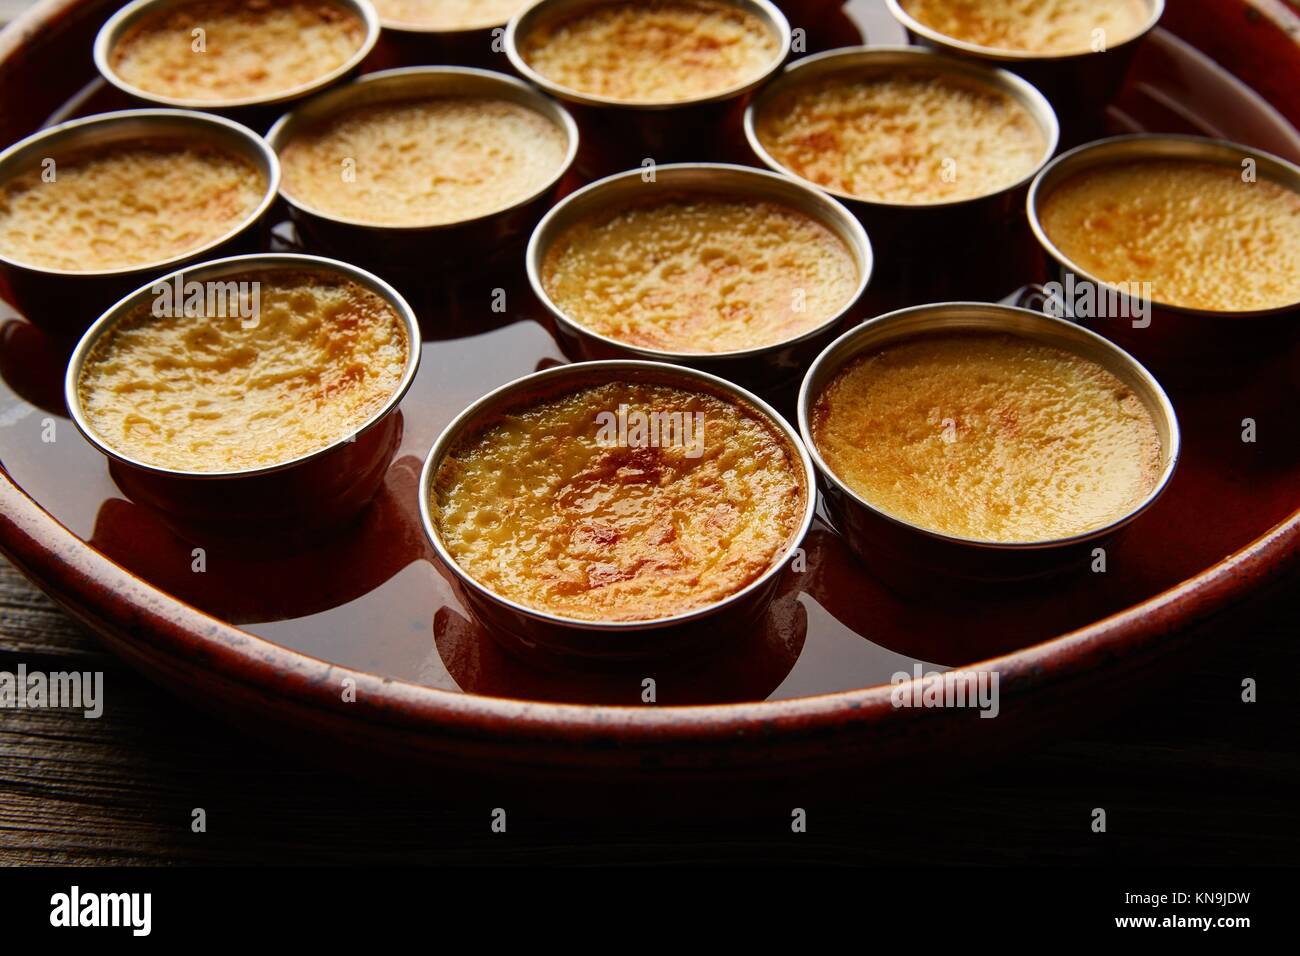 Ministerie experimenteel Verbinding Custard Creme Caramel Flan dessert bain marie oven cooked Stock Photo -  Alamy